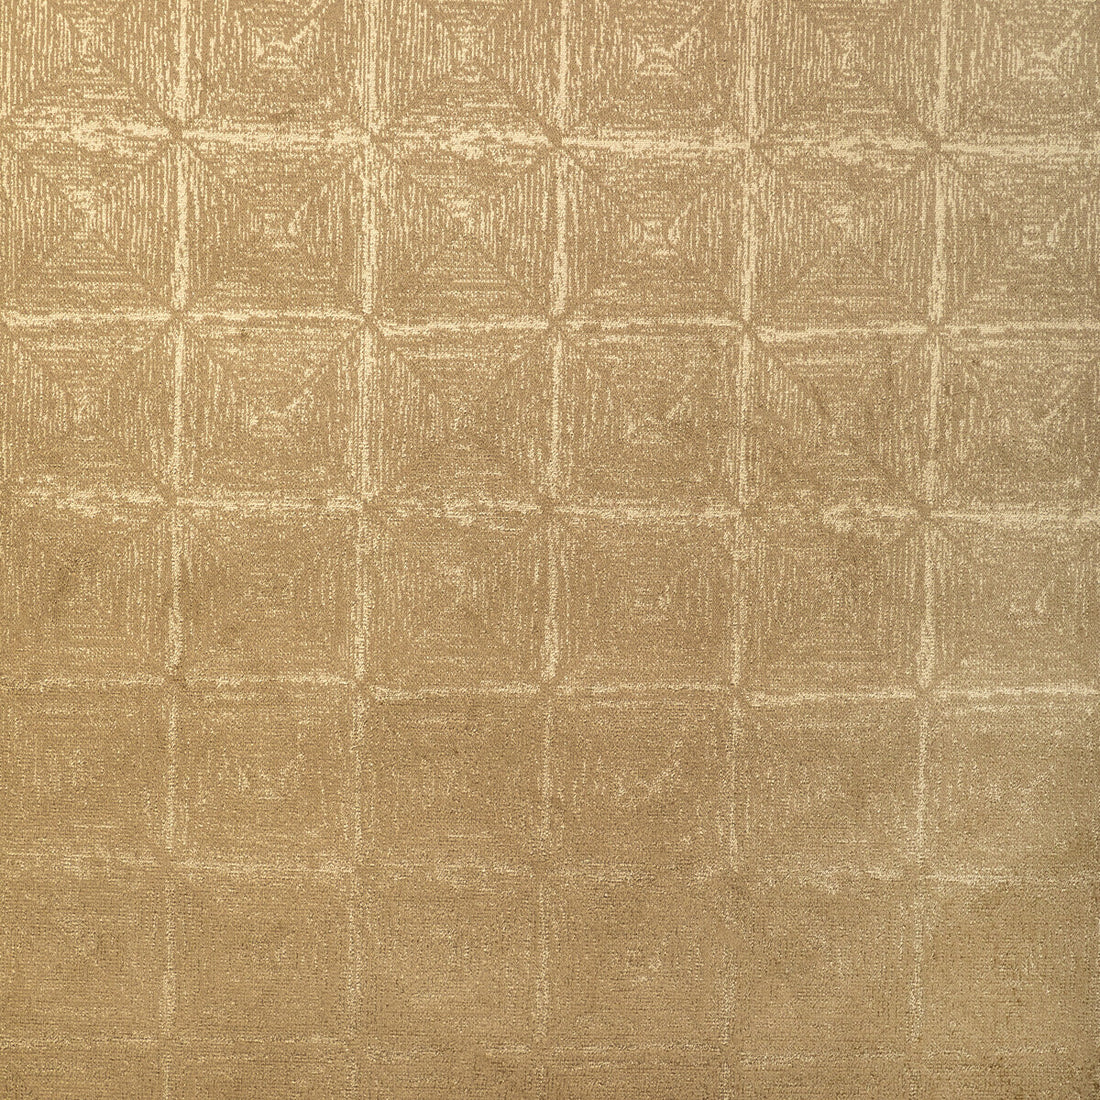 Illuminati fabric in inca color - pattern 36044.40.0 - by Kravet Contract